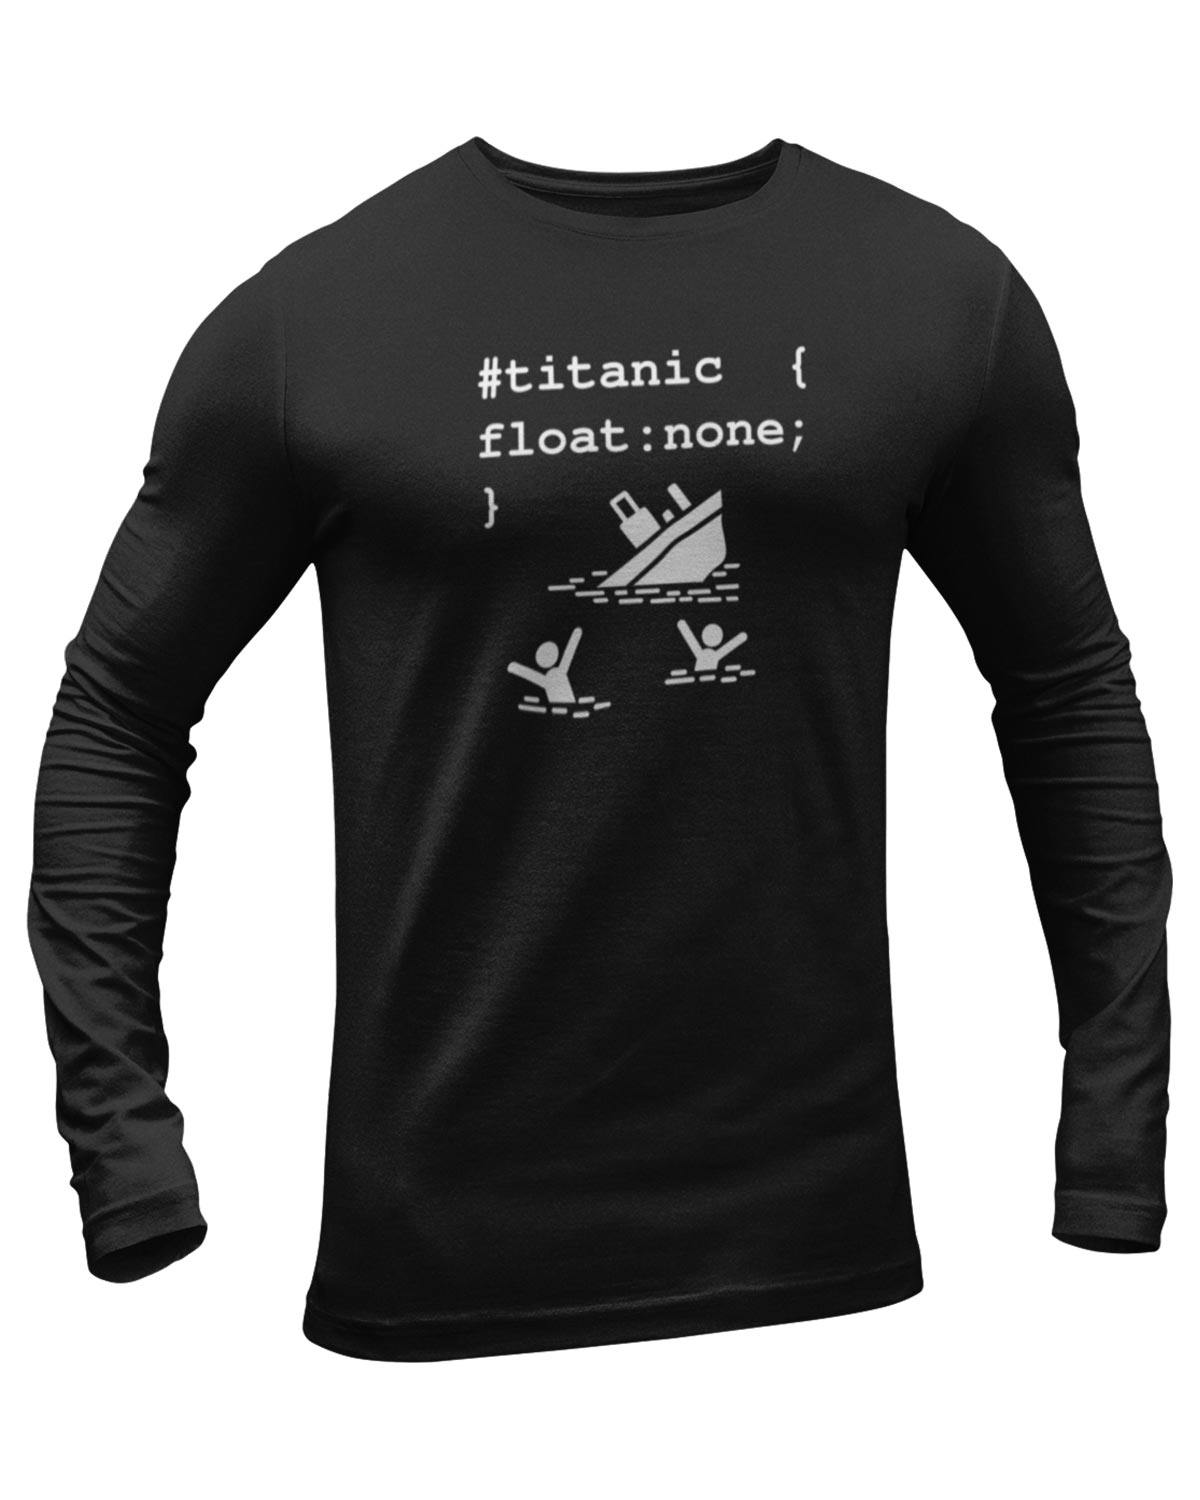 Titanic Float None Full Sleeve Geek T-Shirt